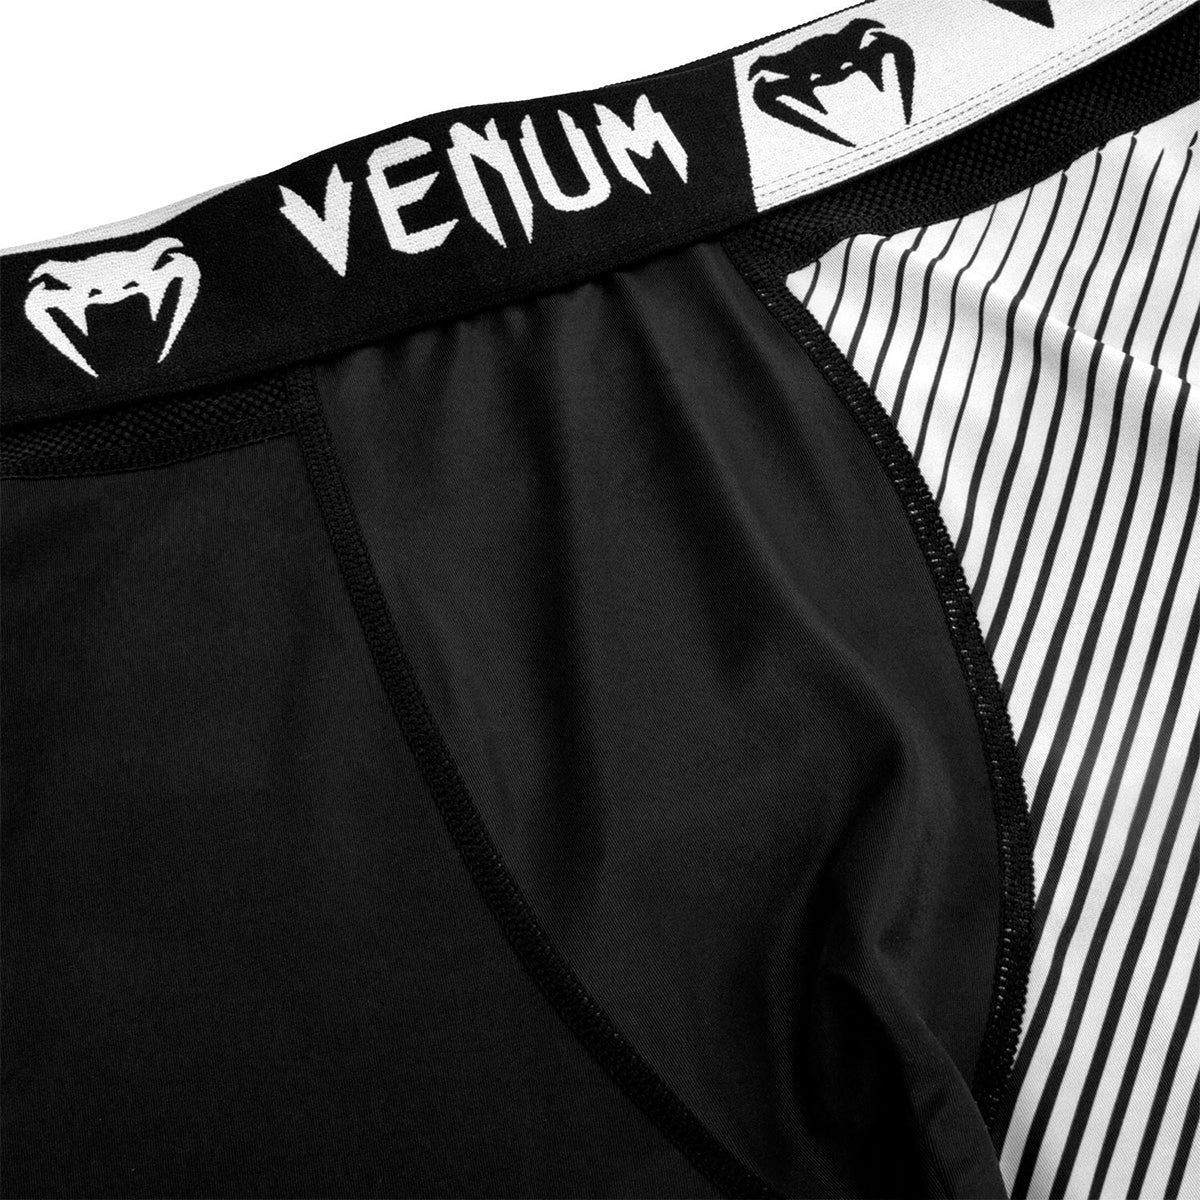 Venum No-Gi 2.0 MMA Compression Spats - Black/White Venum